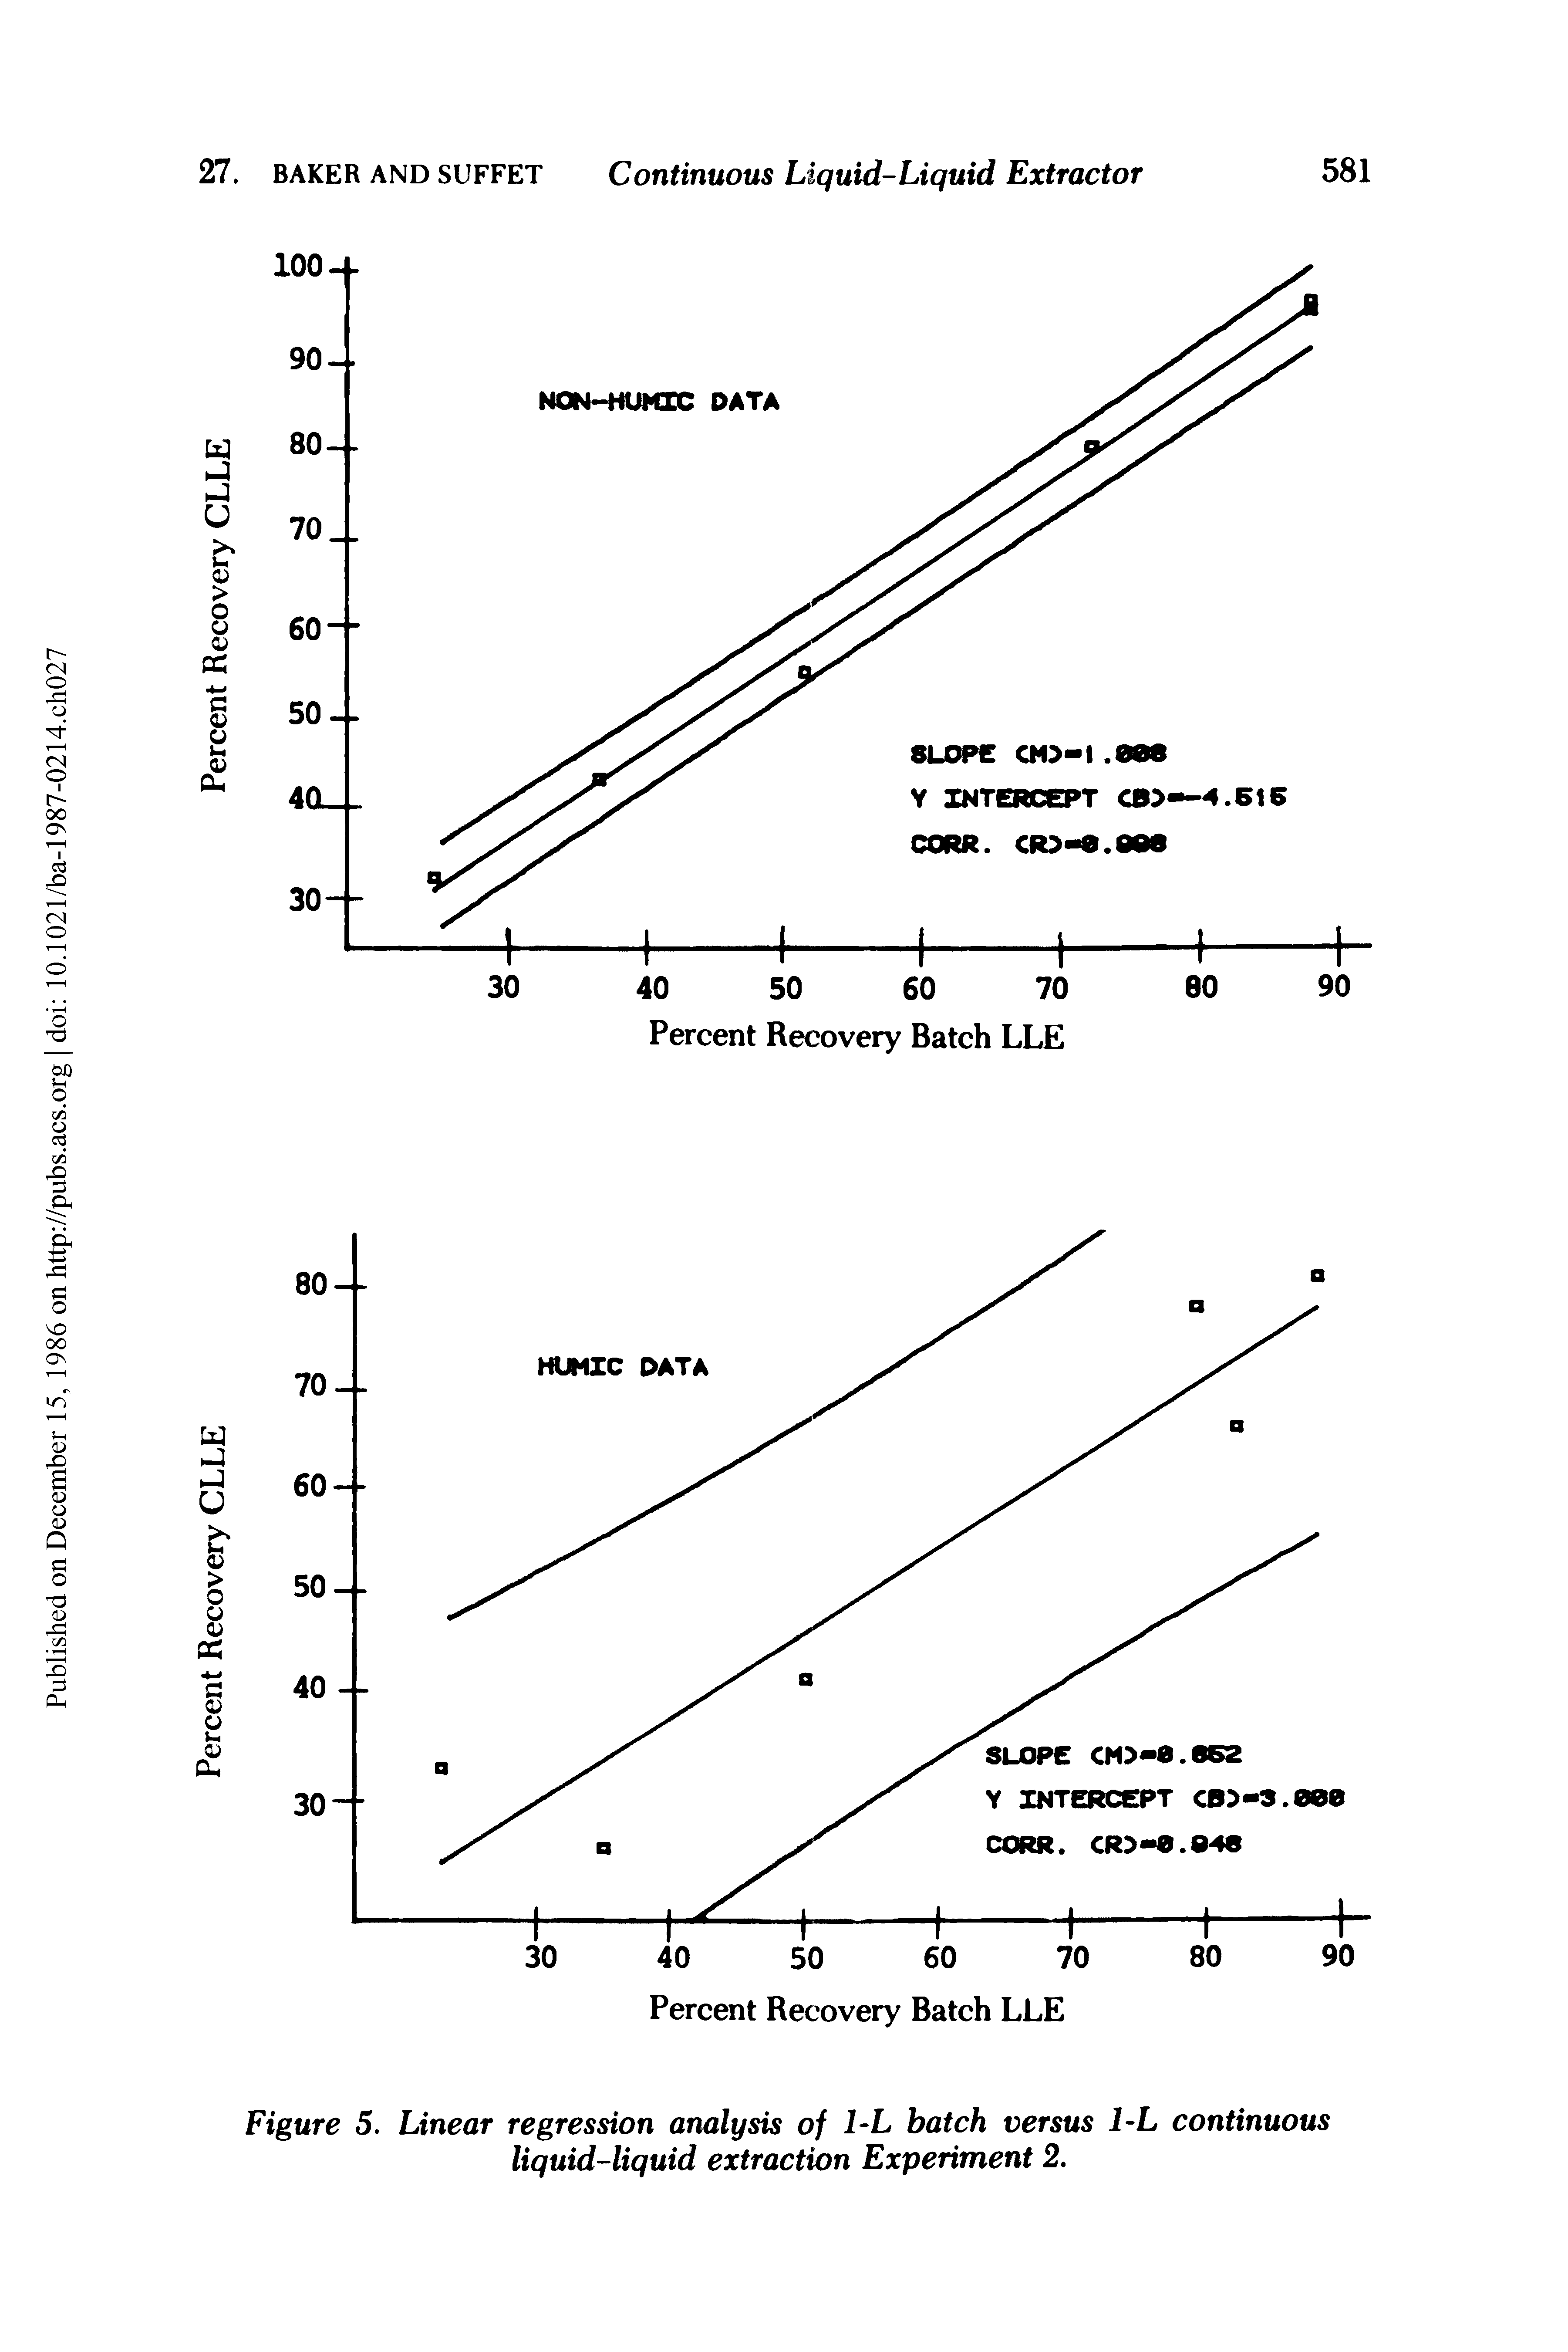 Figure 5. Linear regression analysis of 1-L batch versus 1-L continuous liquid-liquid extraction Experiment 2.